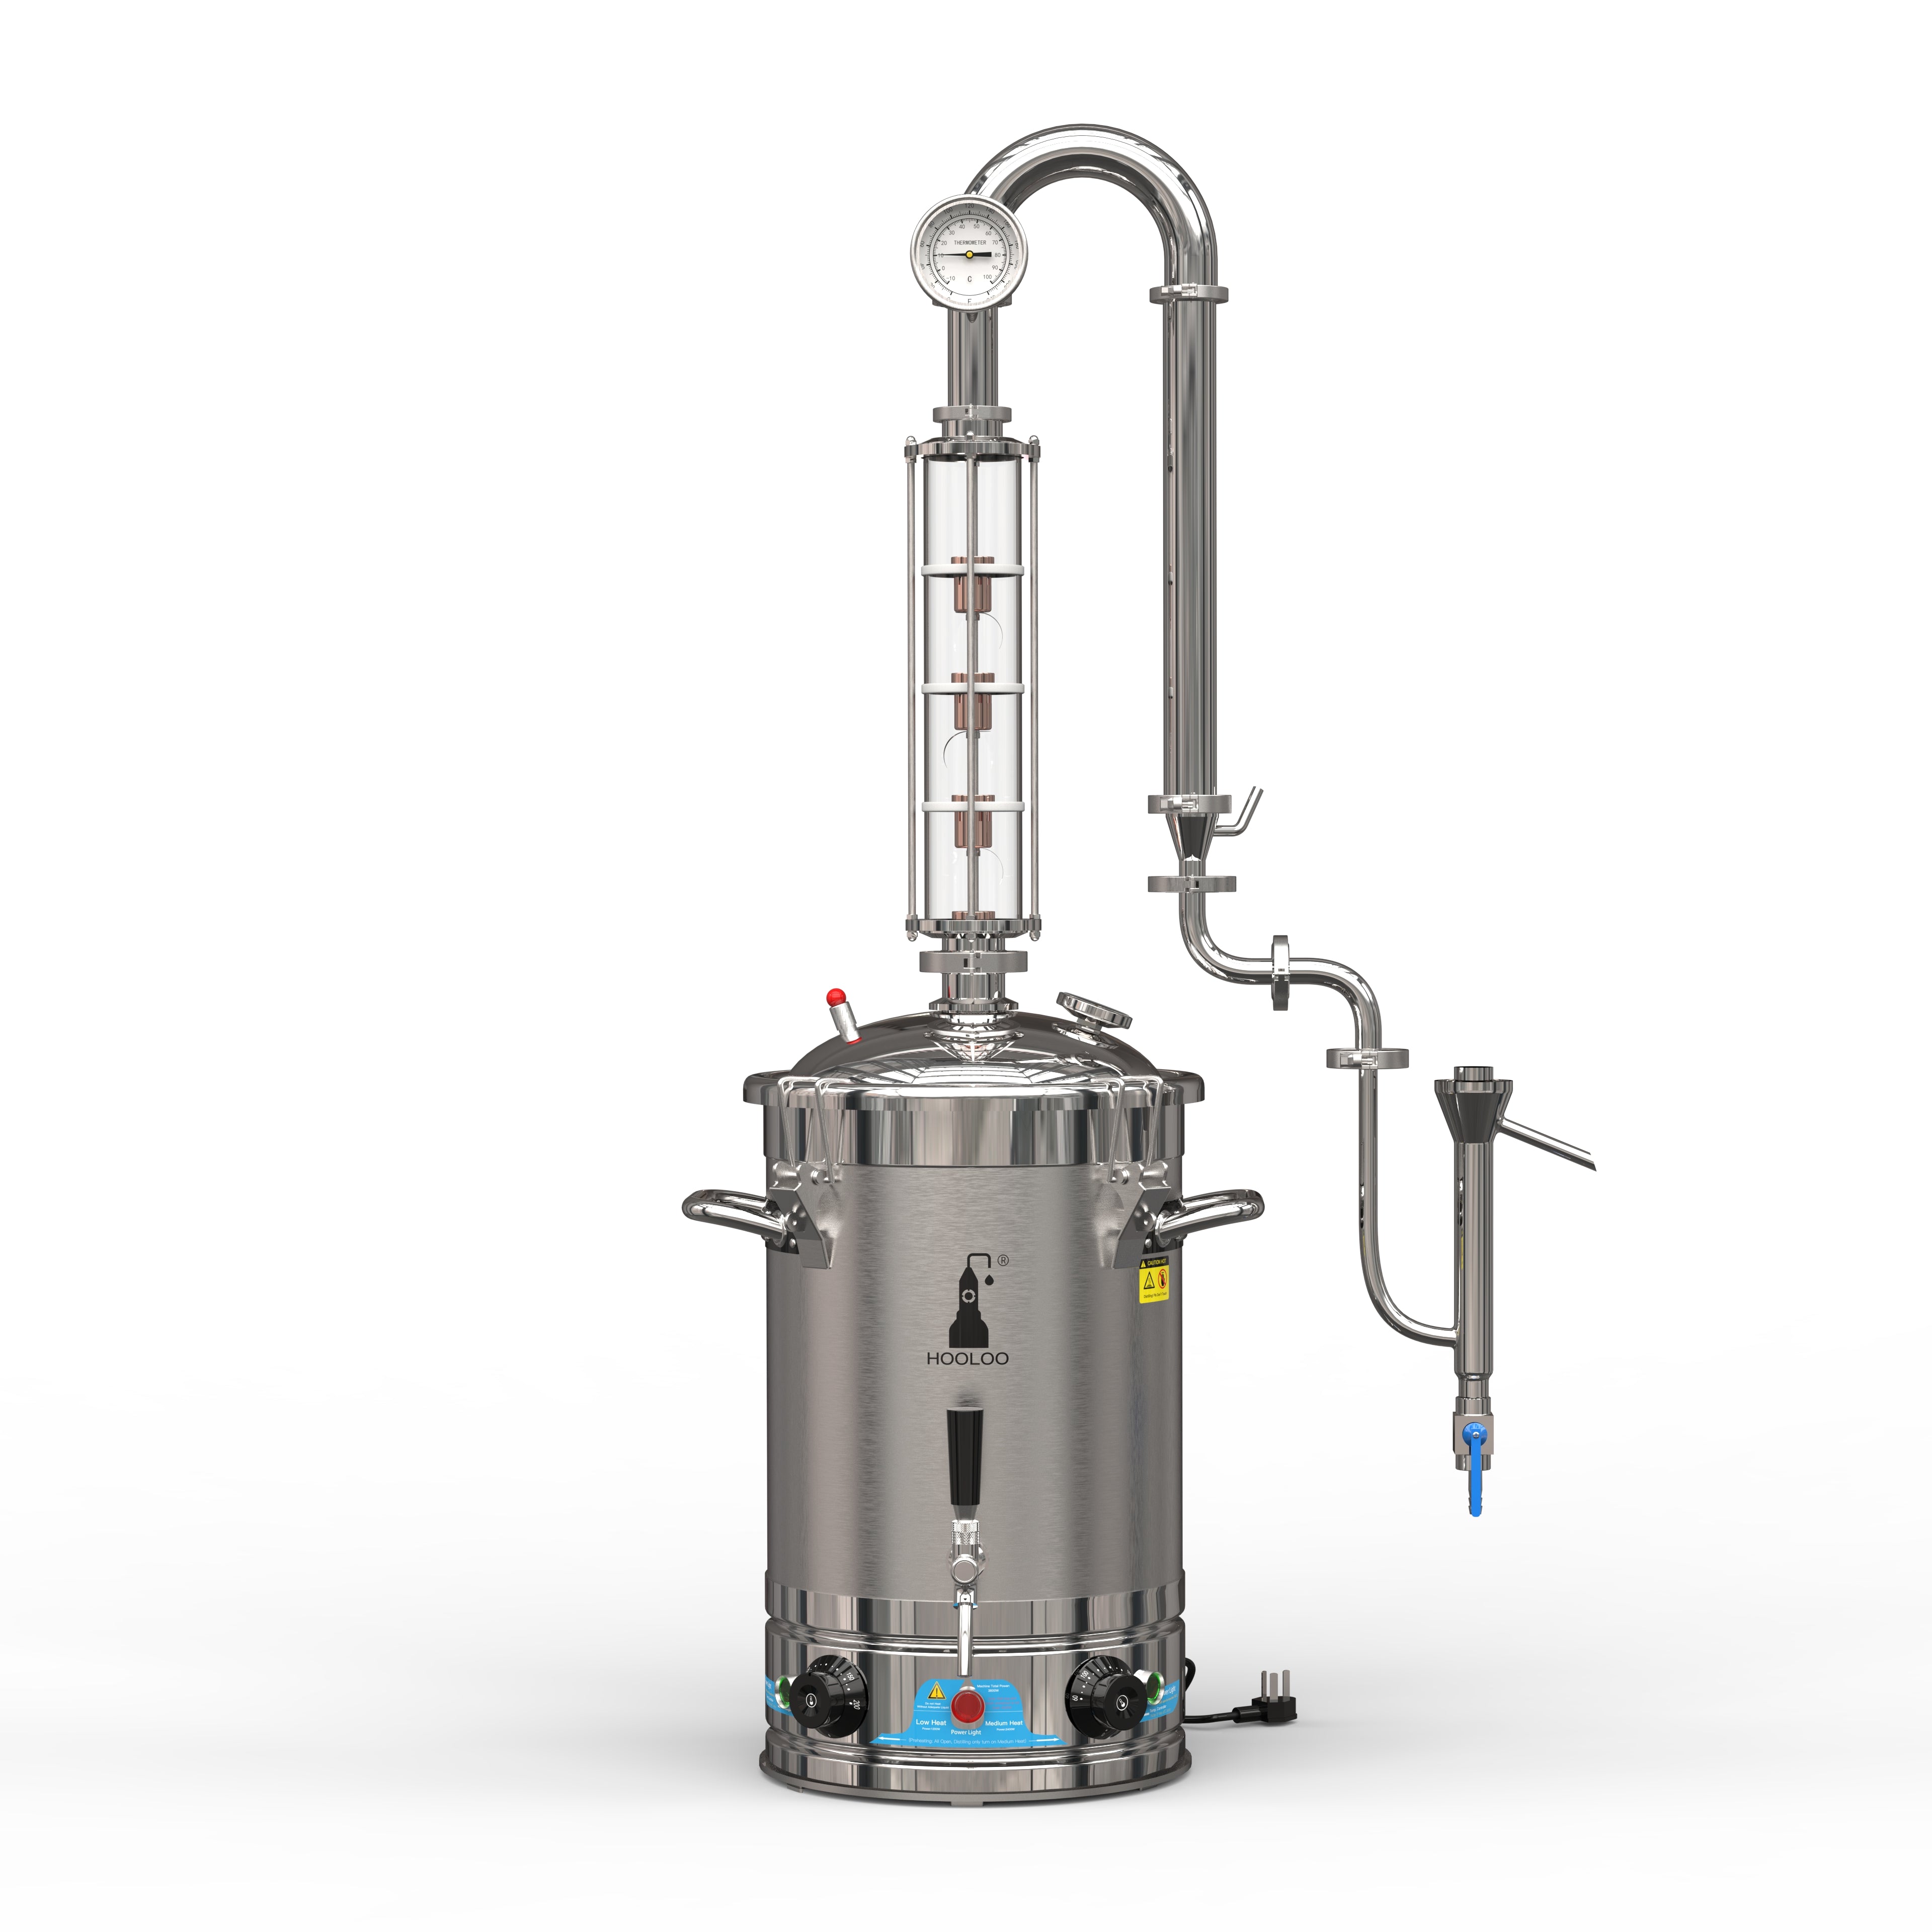 HOOLOO CT30s/CT30sP Distiller